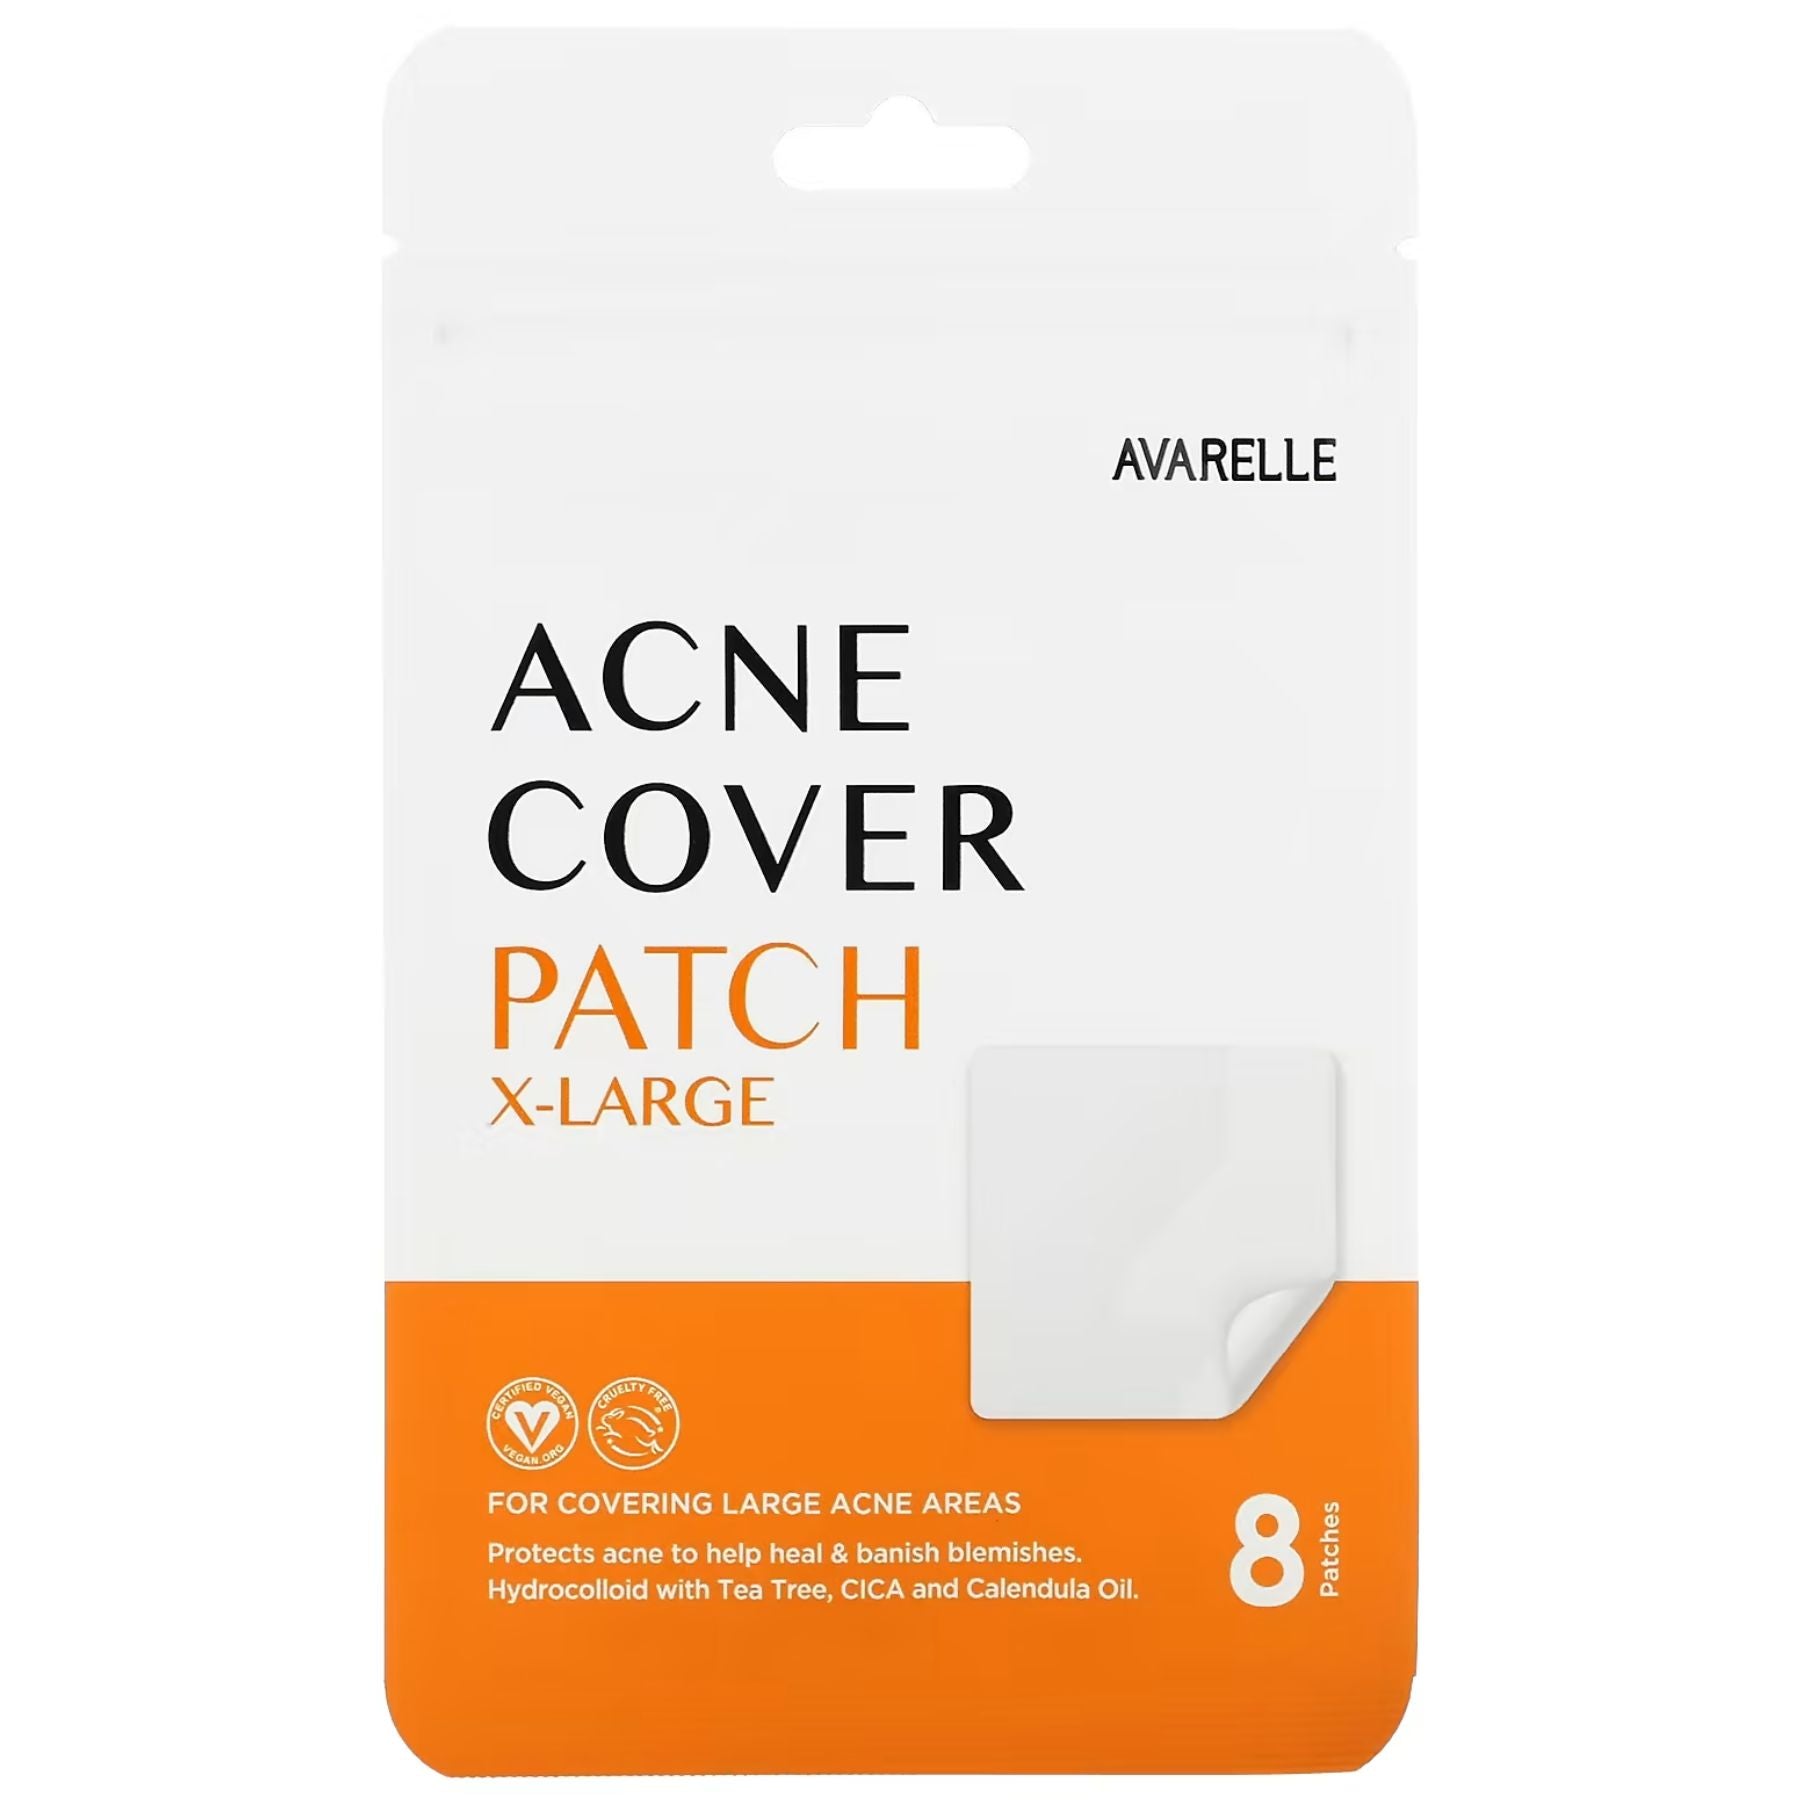 Avarelle Acne Cover Patch XL 8ct